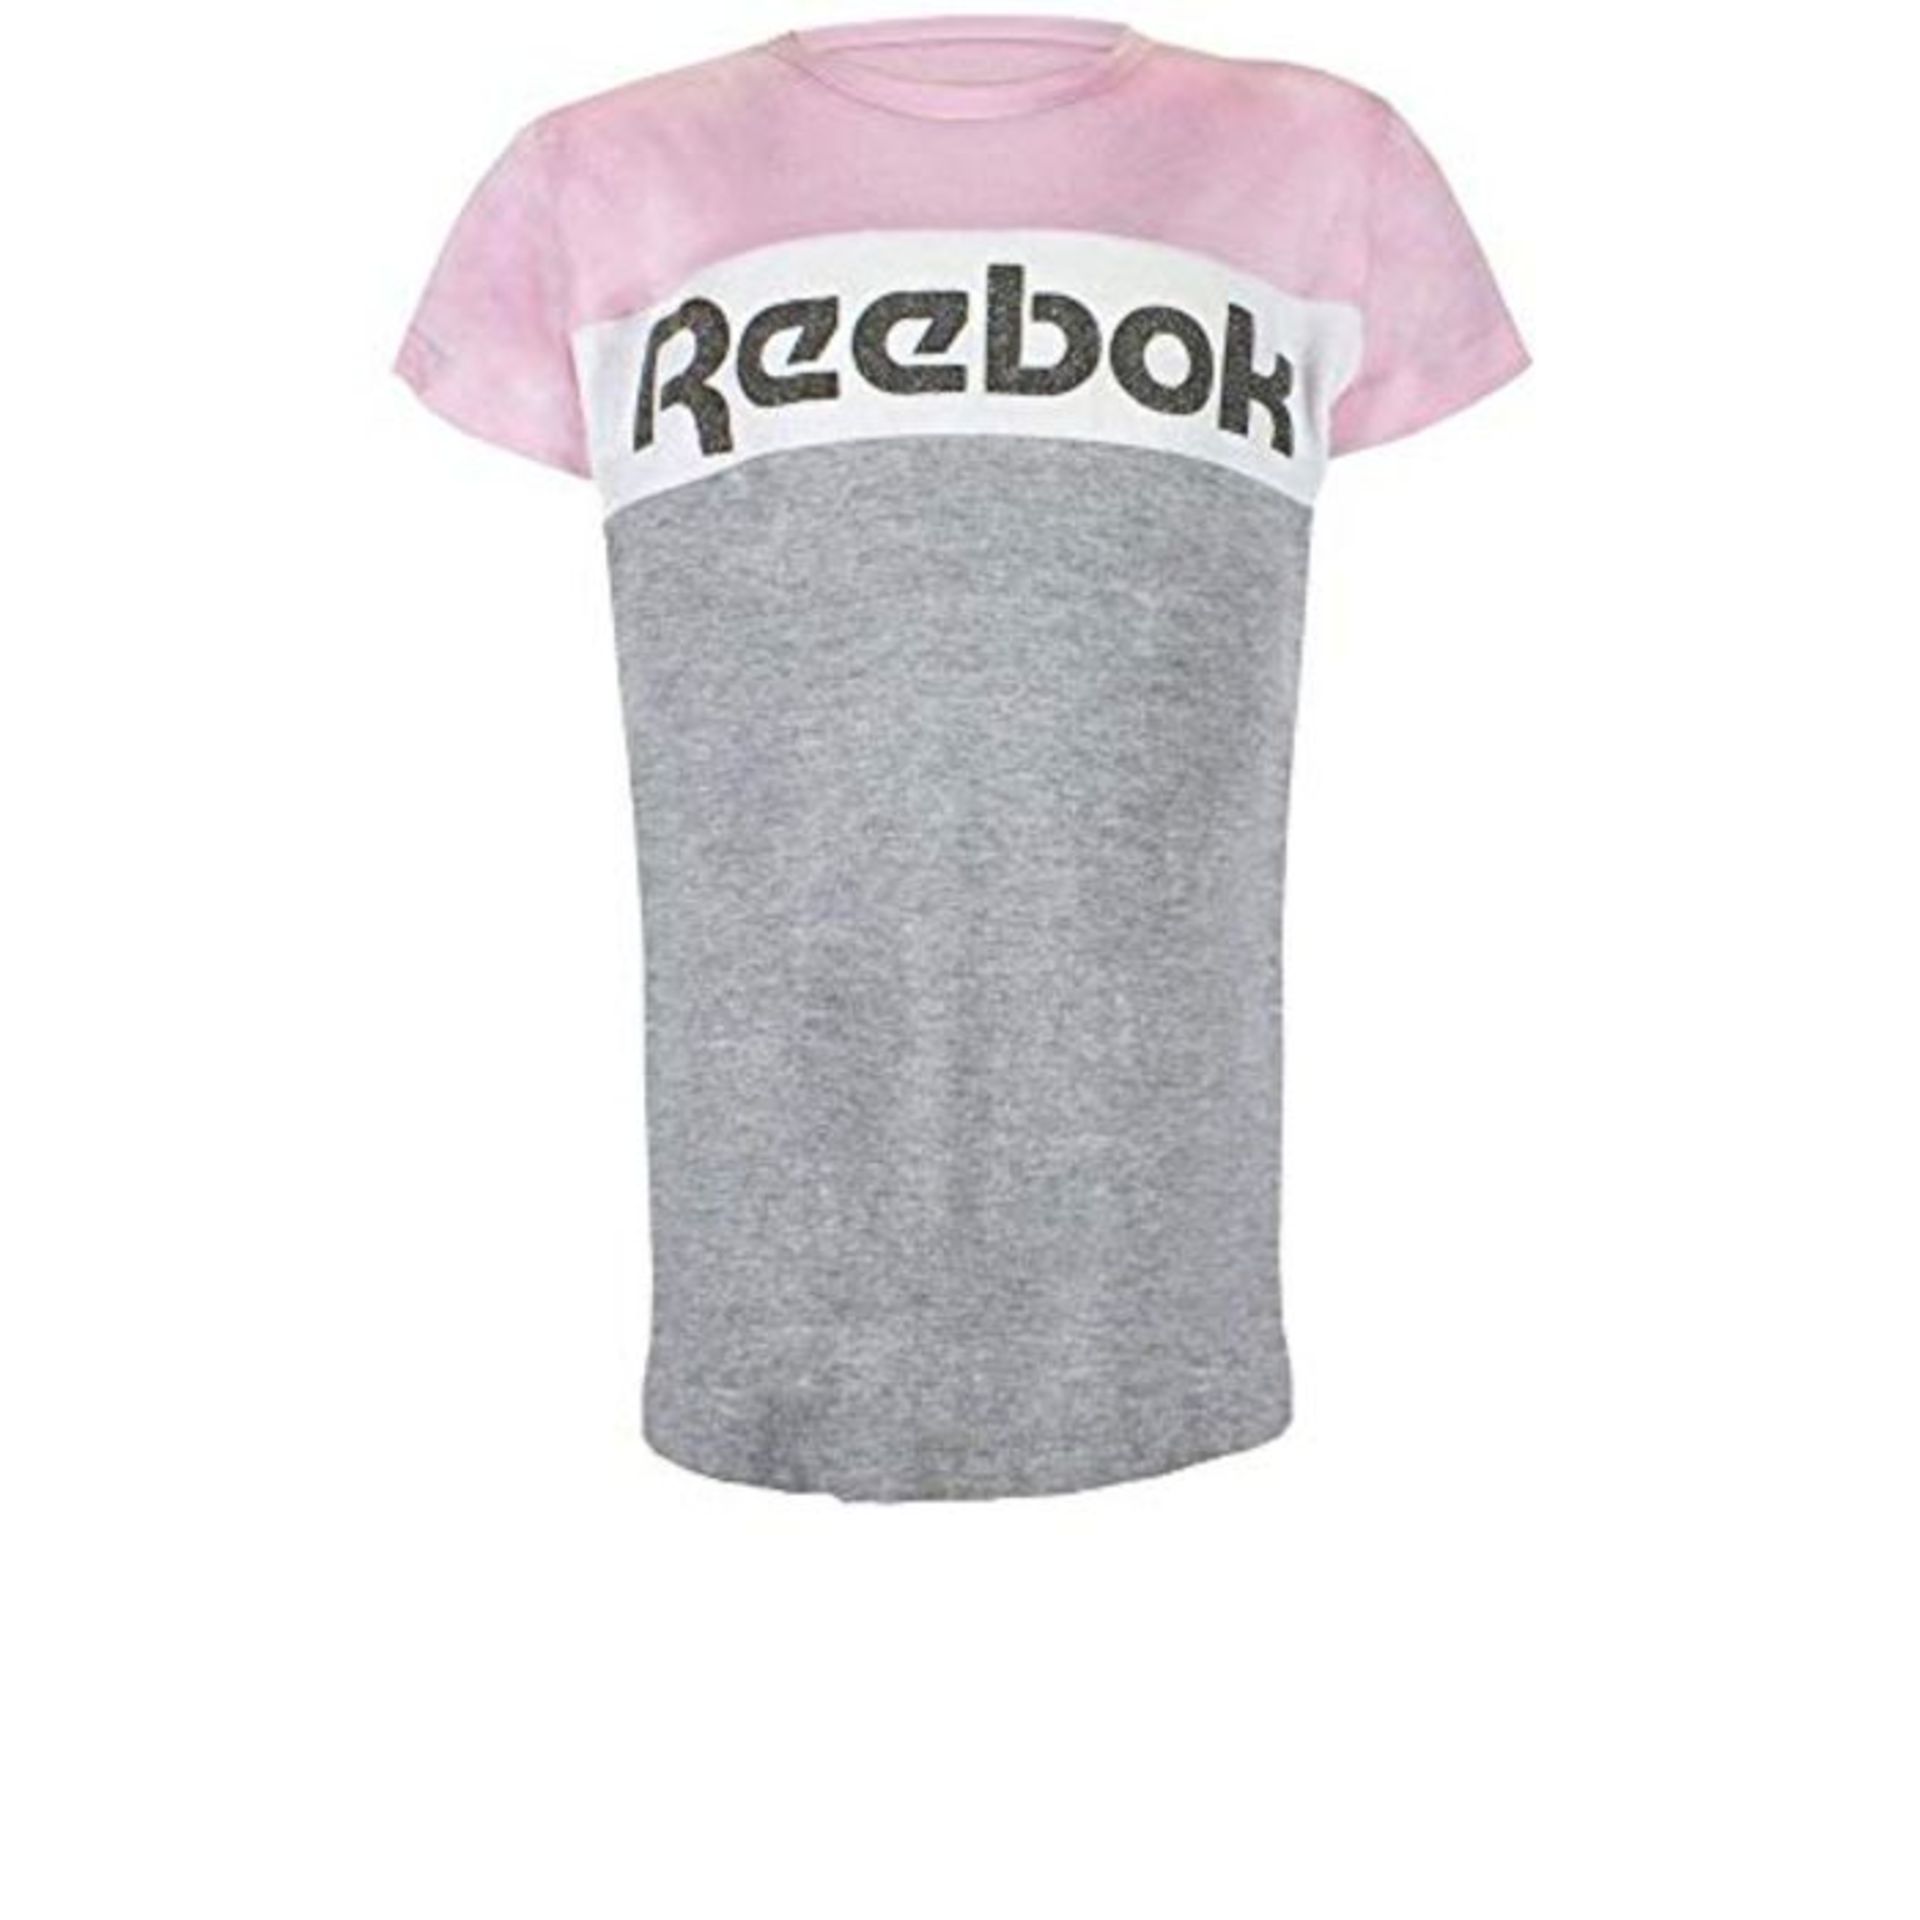 Reebok T-Shirt Big Color Blocked - Girls T-Shirt, Girls, T-Shirt, H73470RG, Light Heat